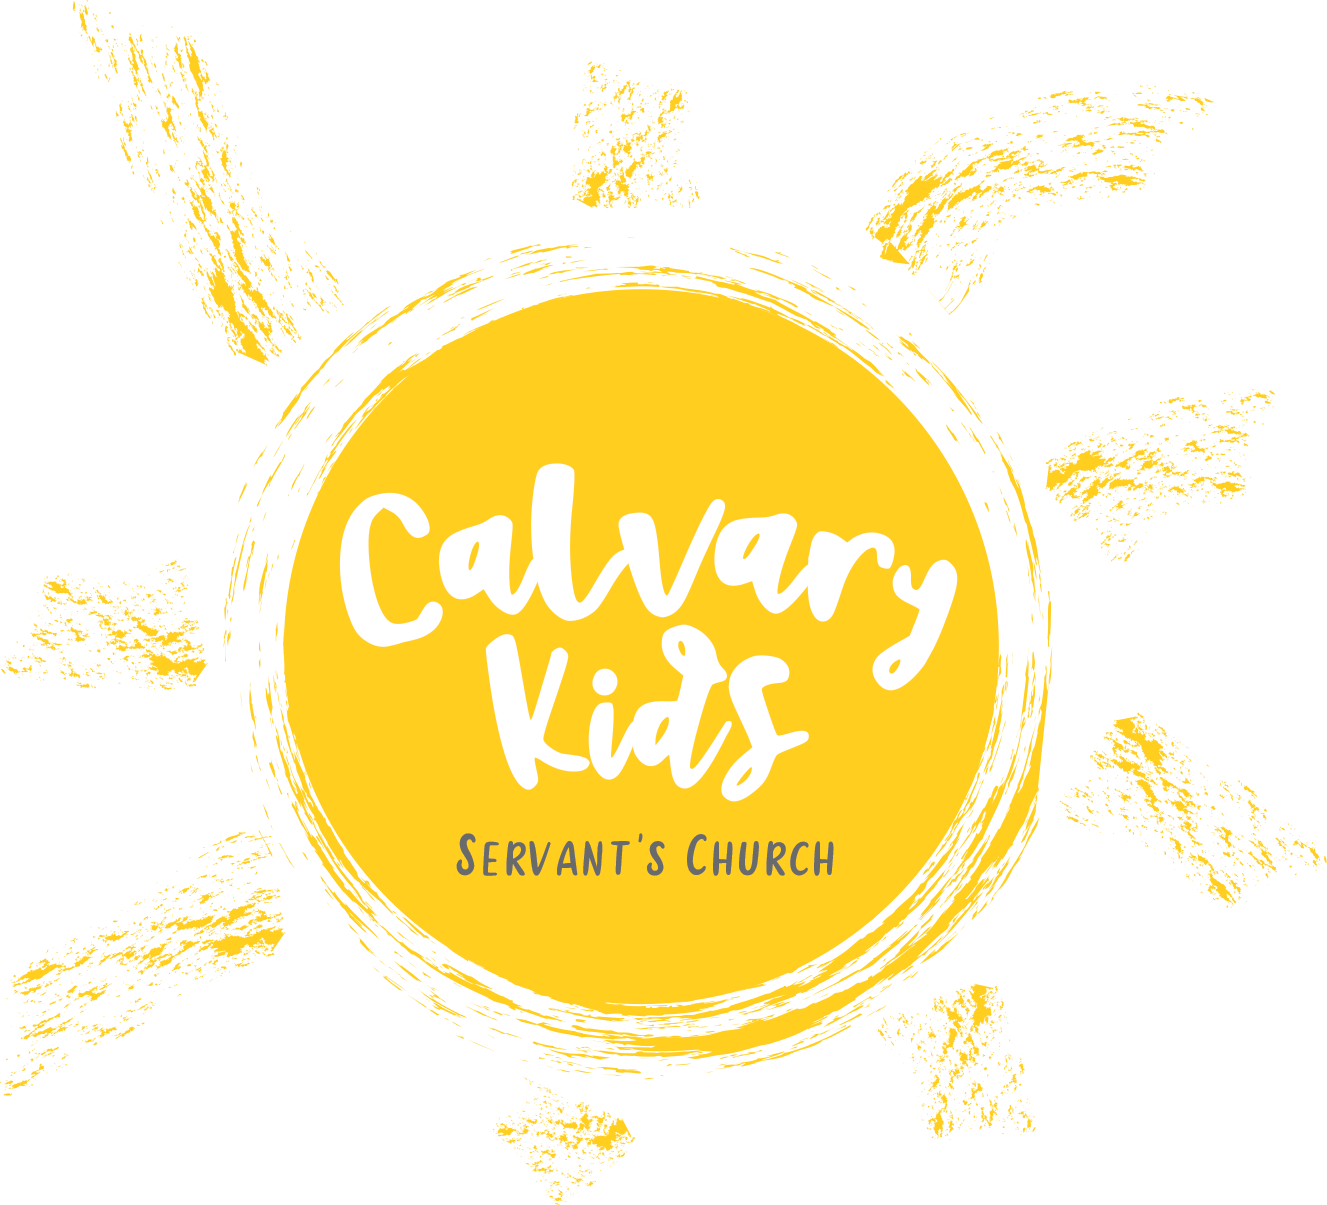 A logo for calvary kids servant 's church